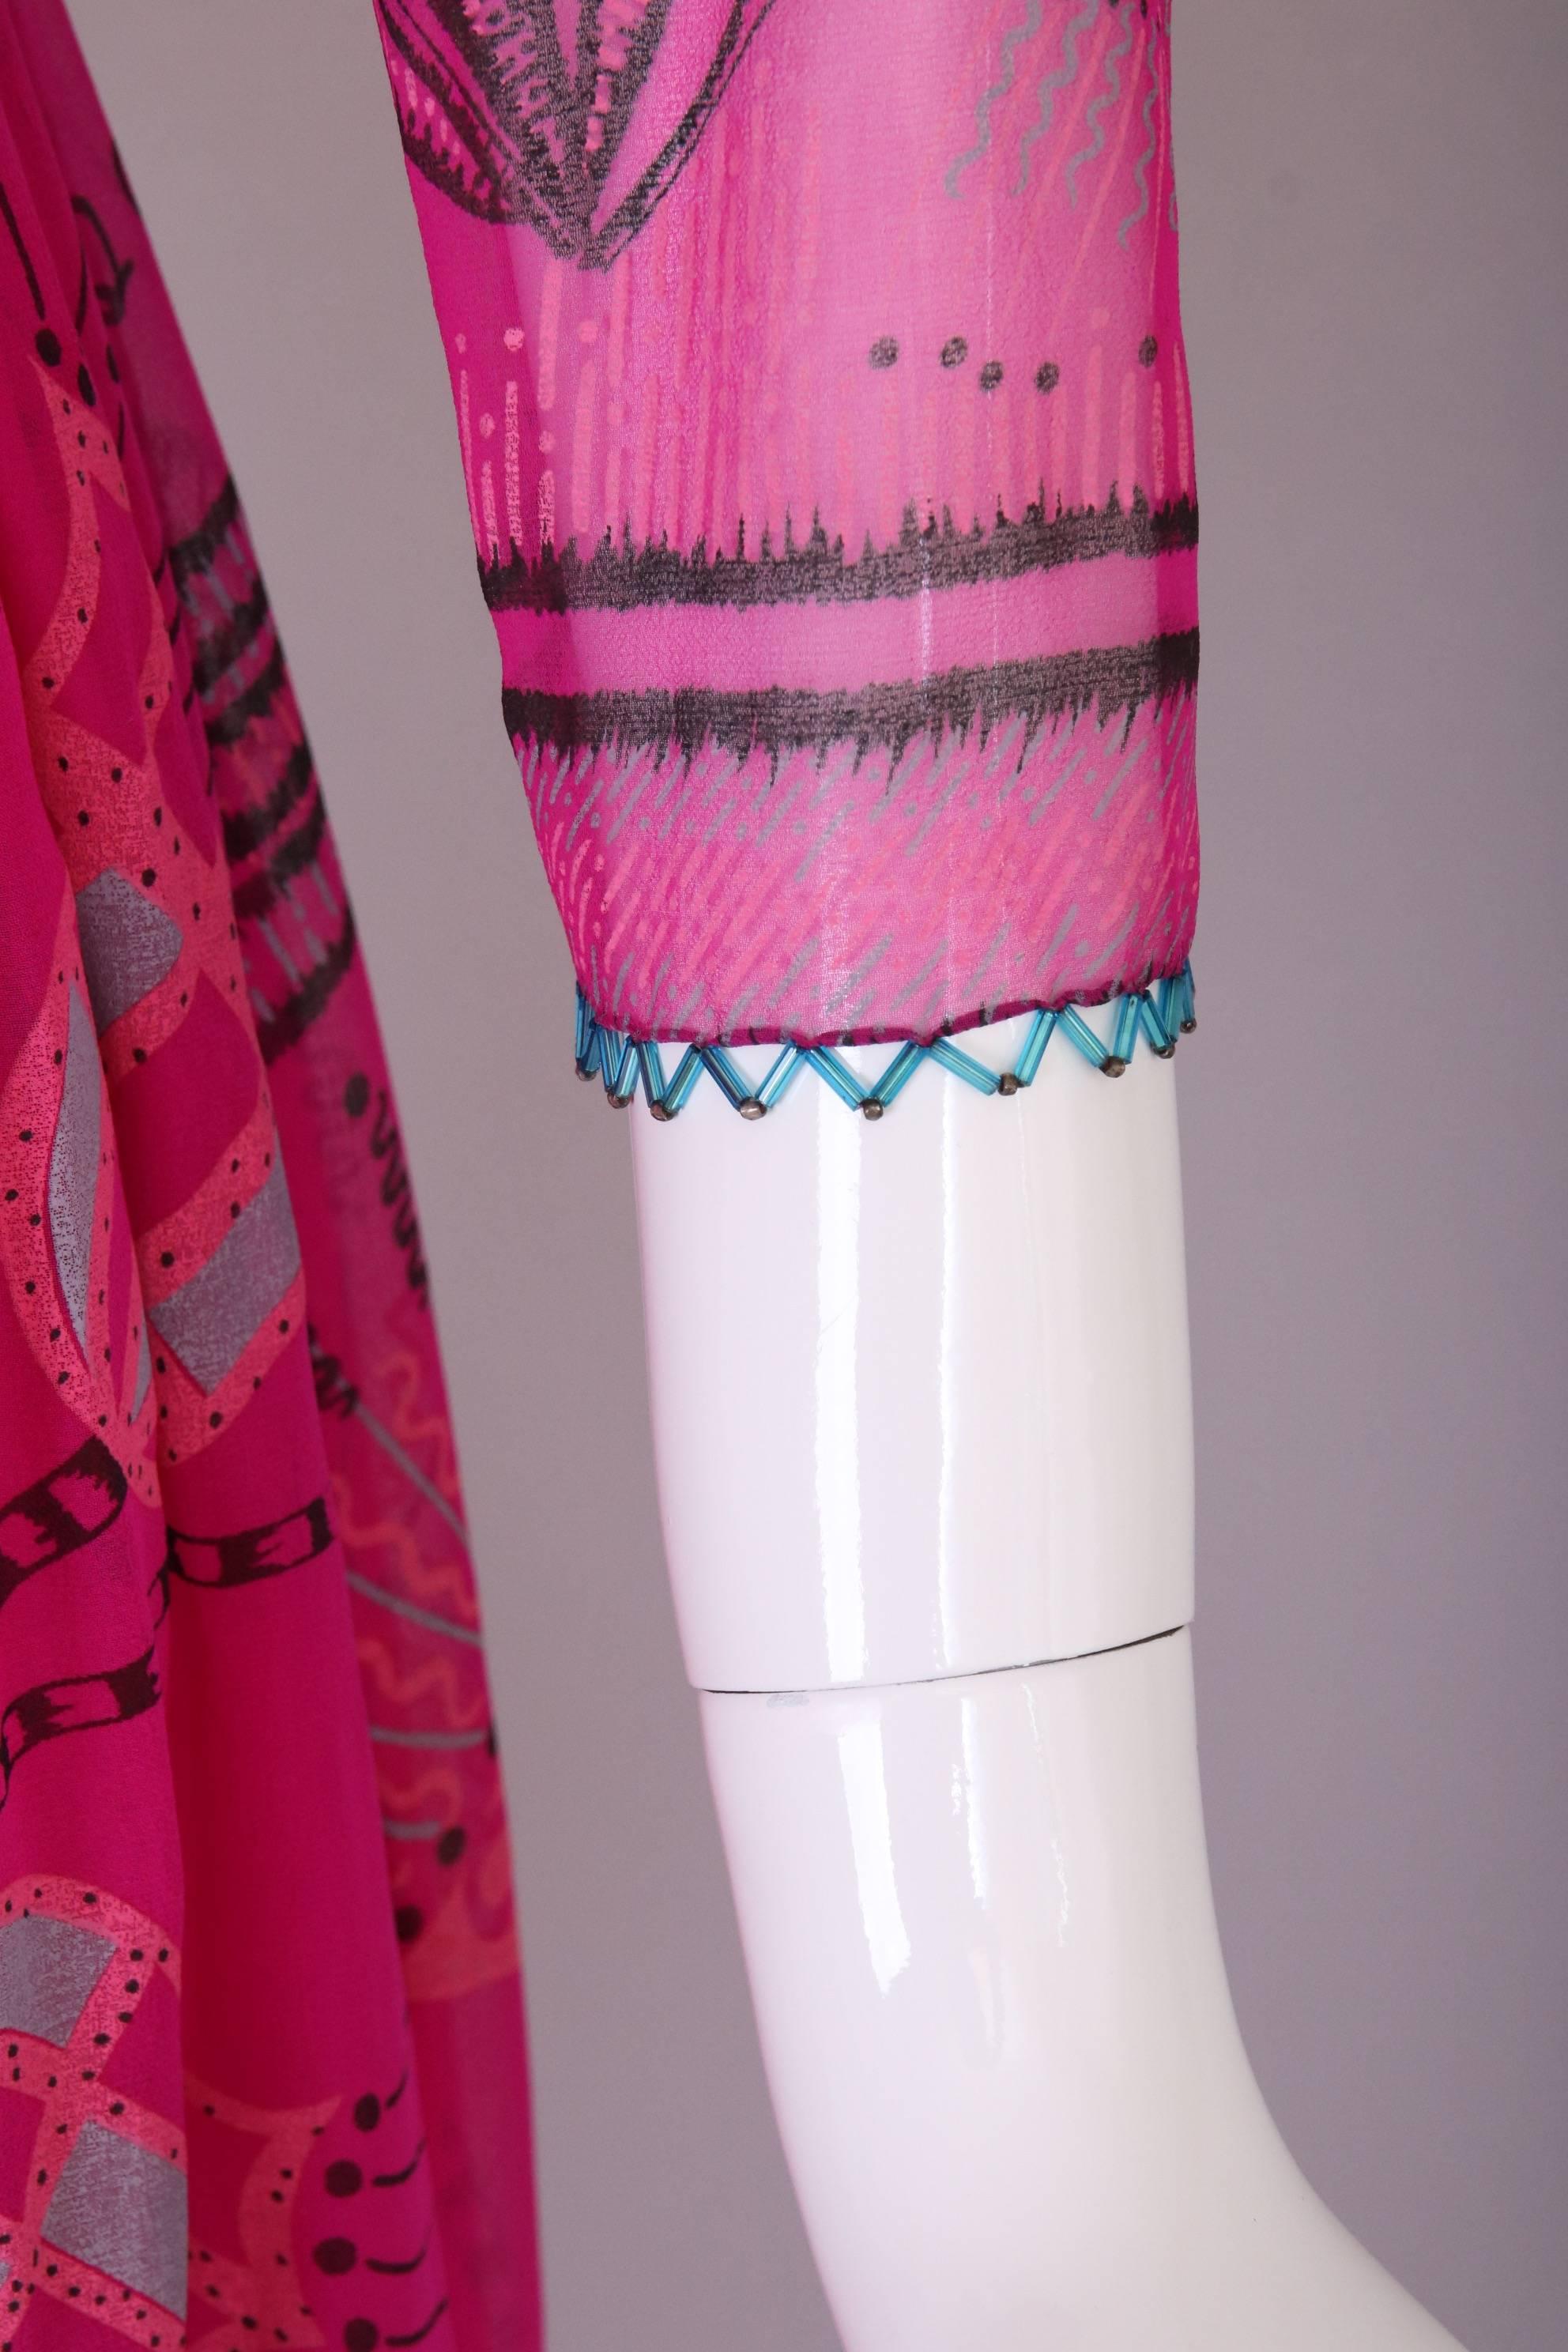 Women's Zandra Rhodes Fuchsia Printed & Beaded Chiffon Dress w/Illusion Top